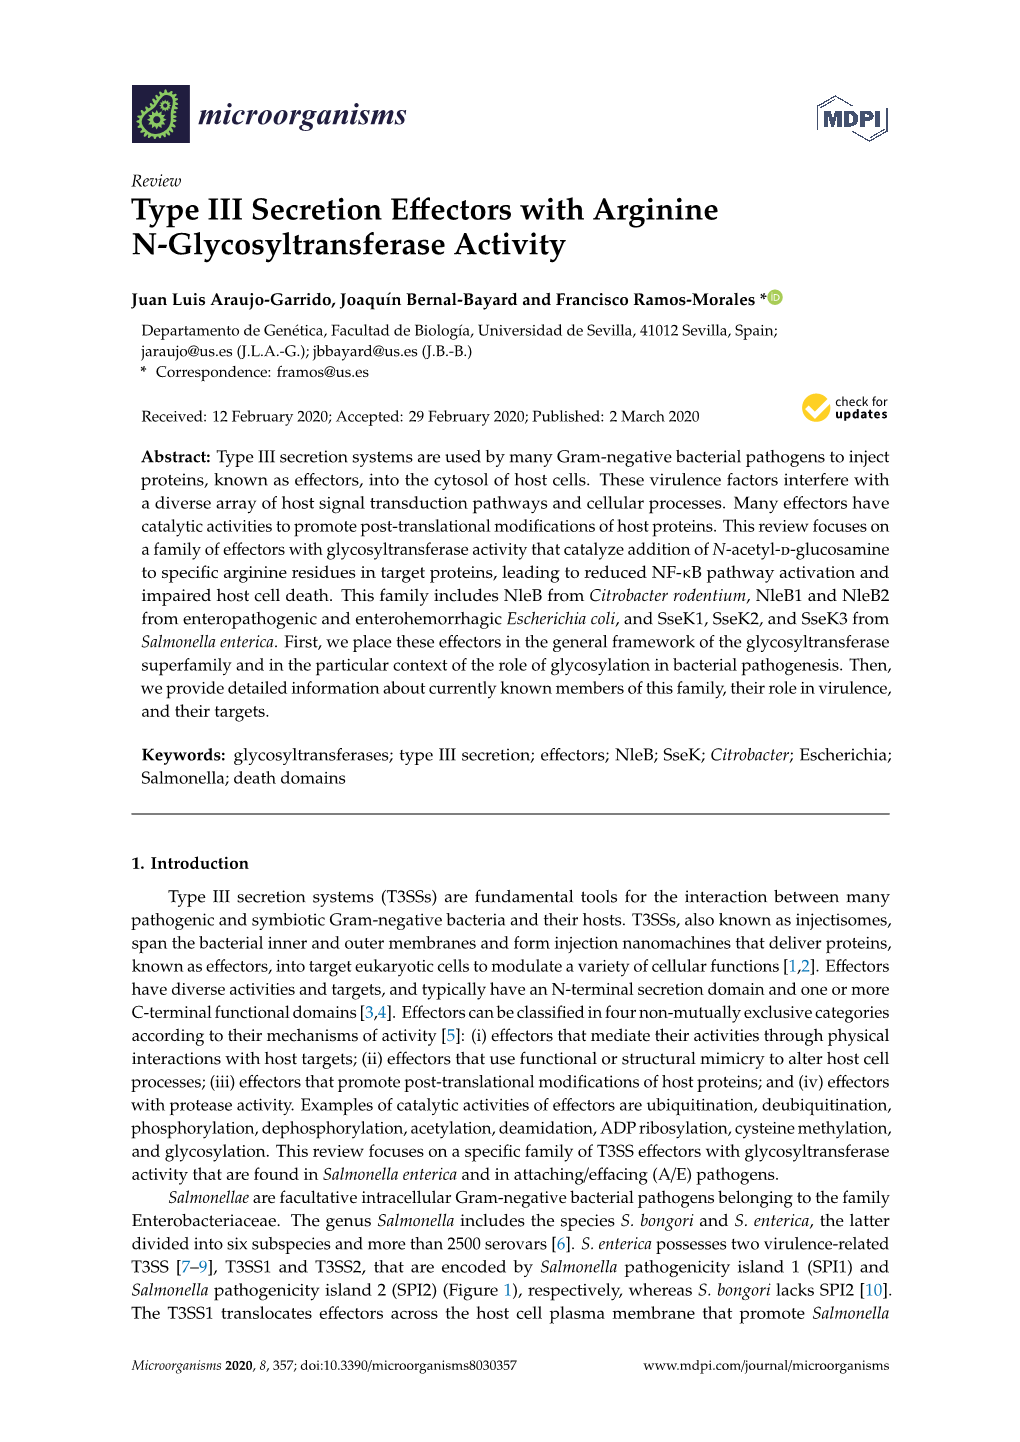 Type III Secretion Effectors with Arginine N-Glycosyltransferase